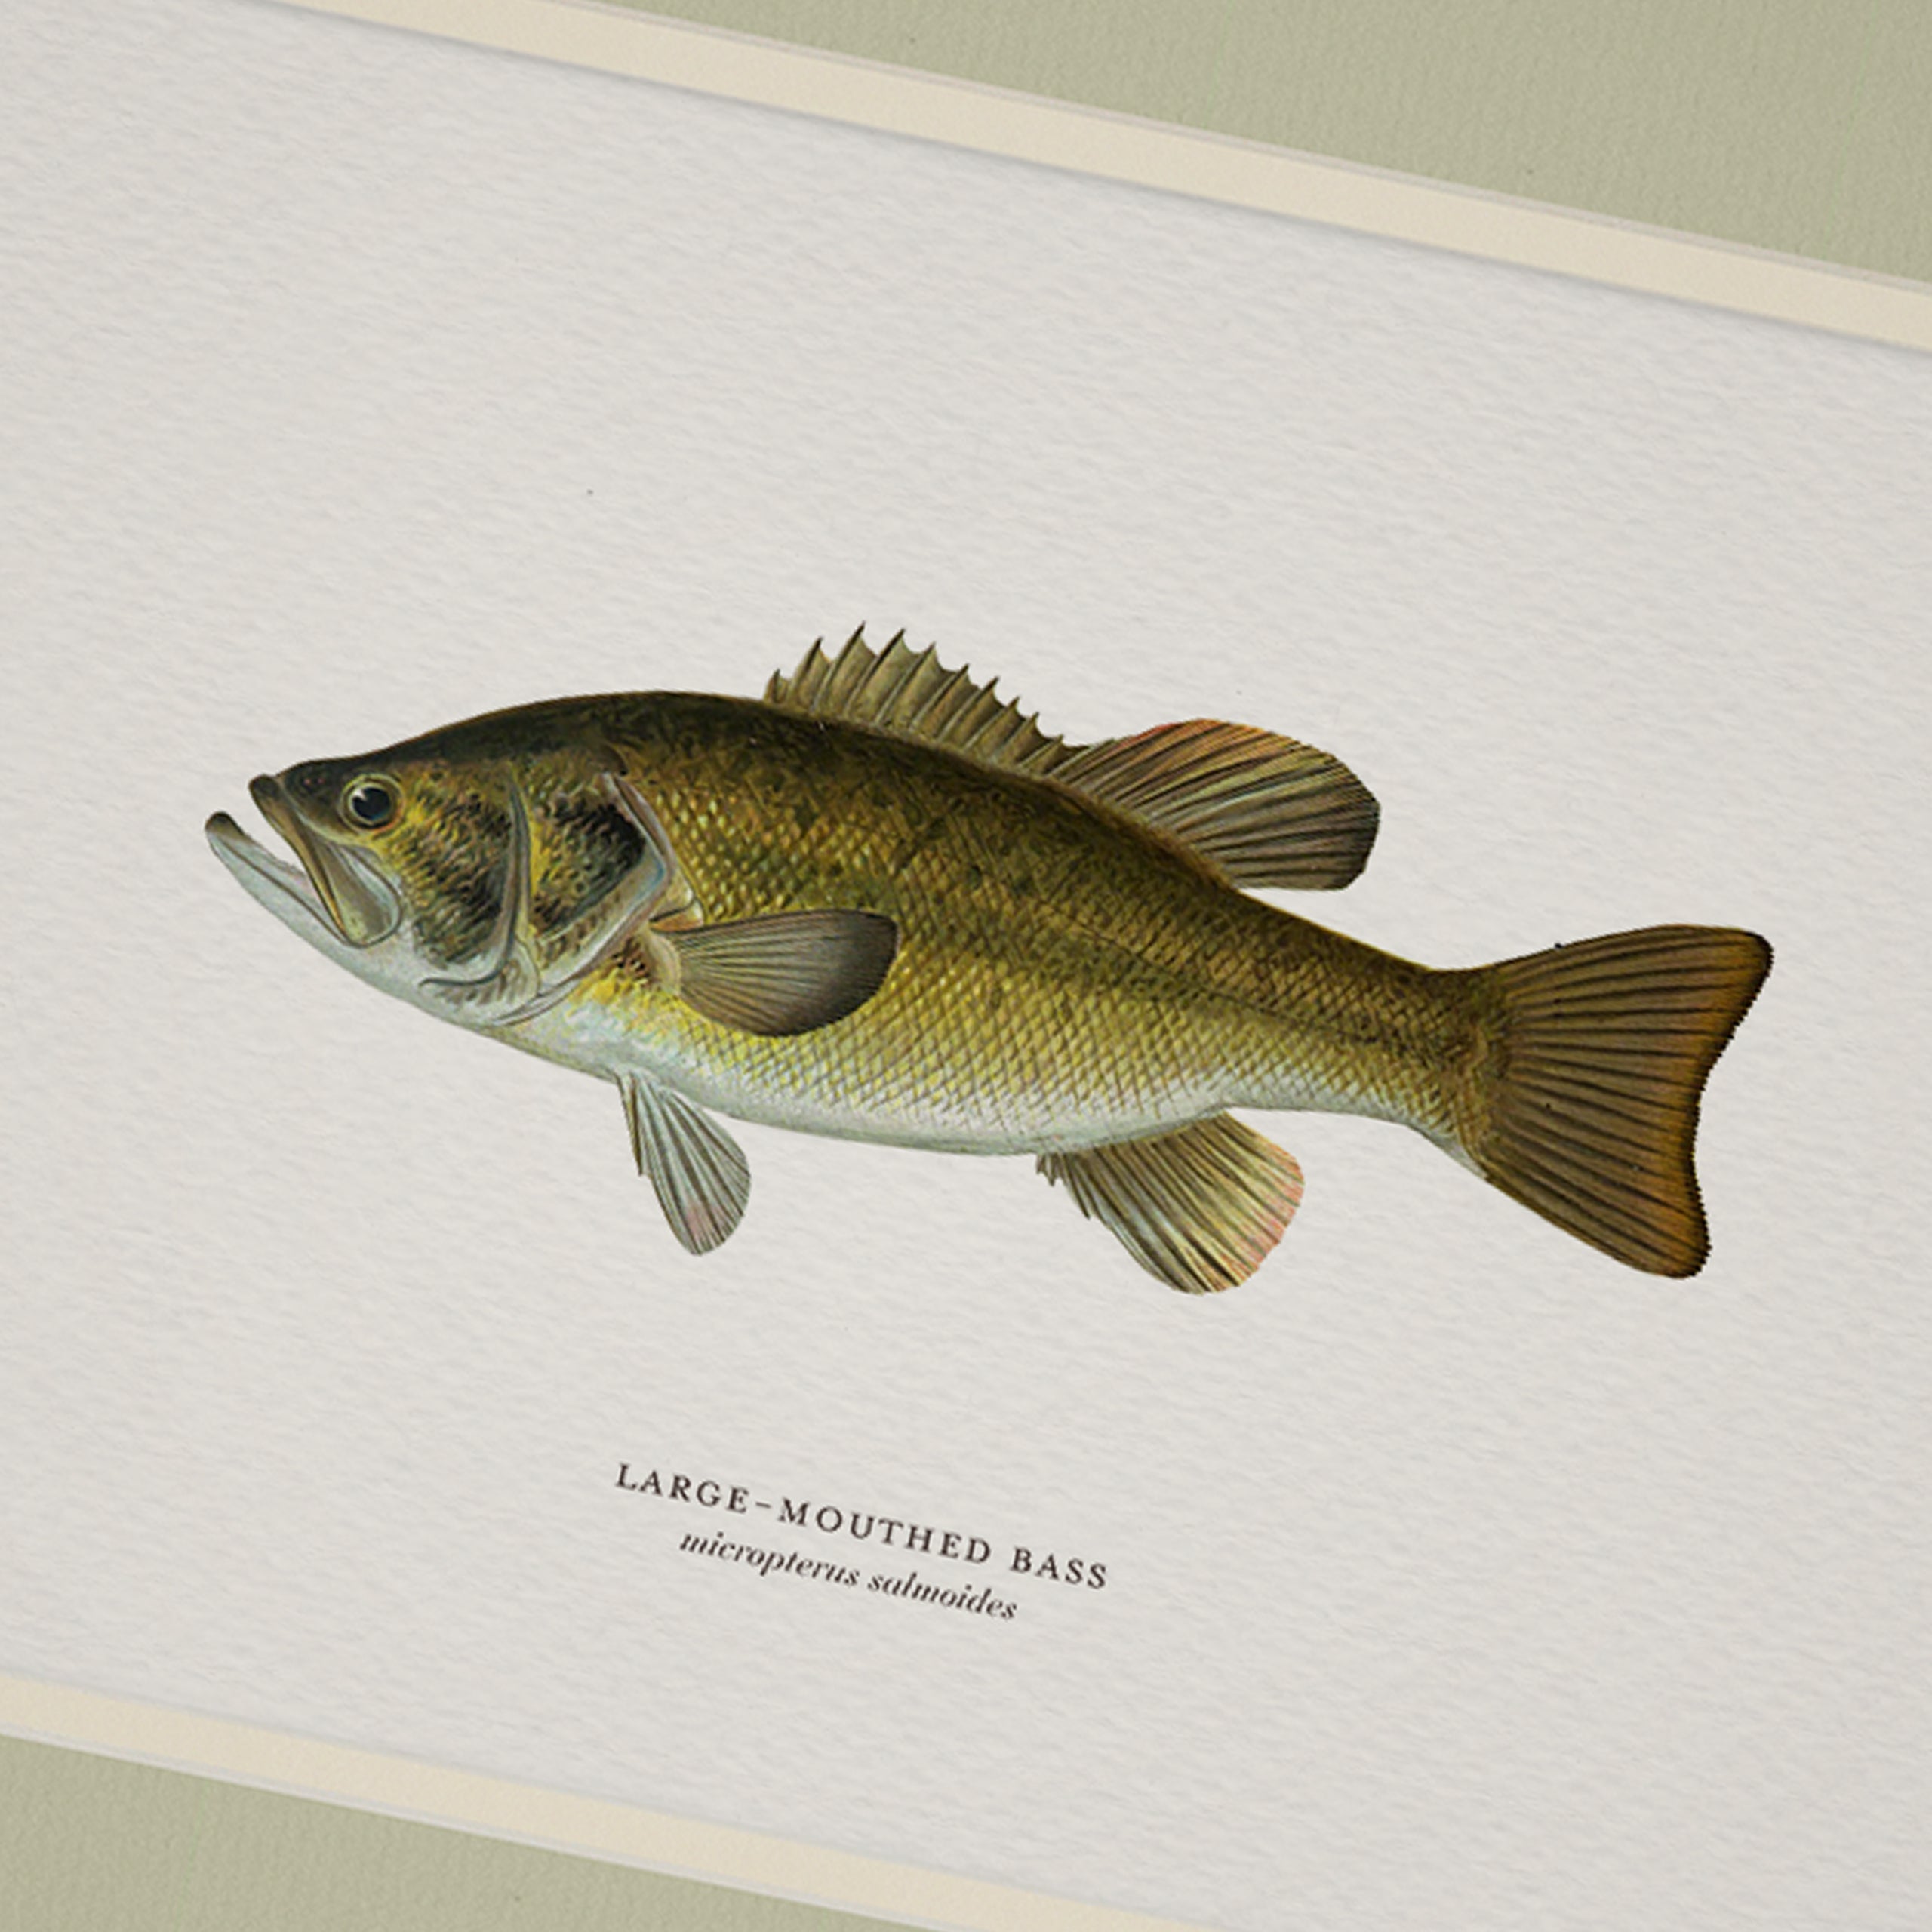 Vintage Naturalist Illustrations: Freshwater Fish